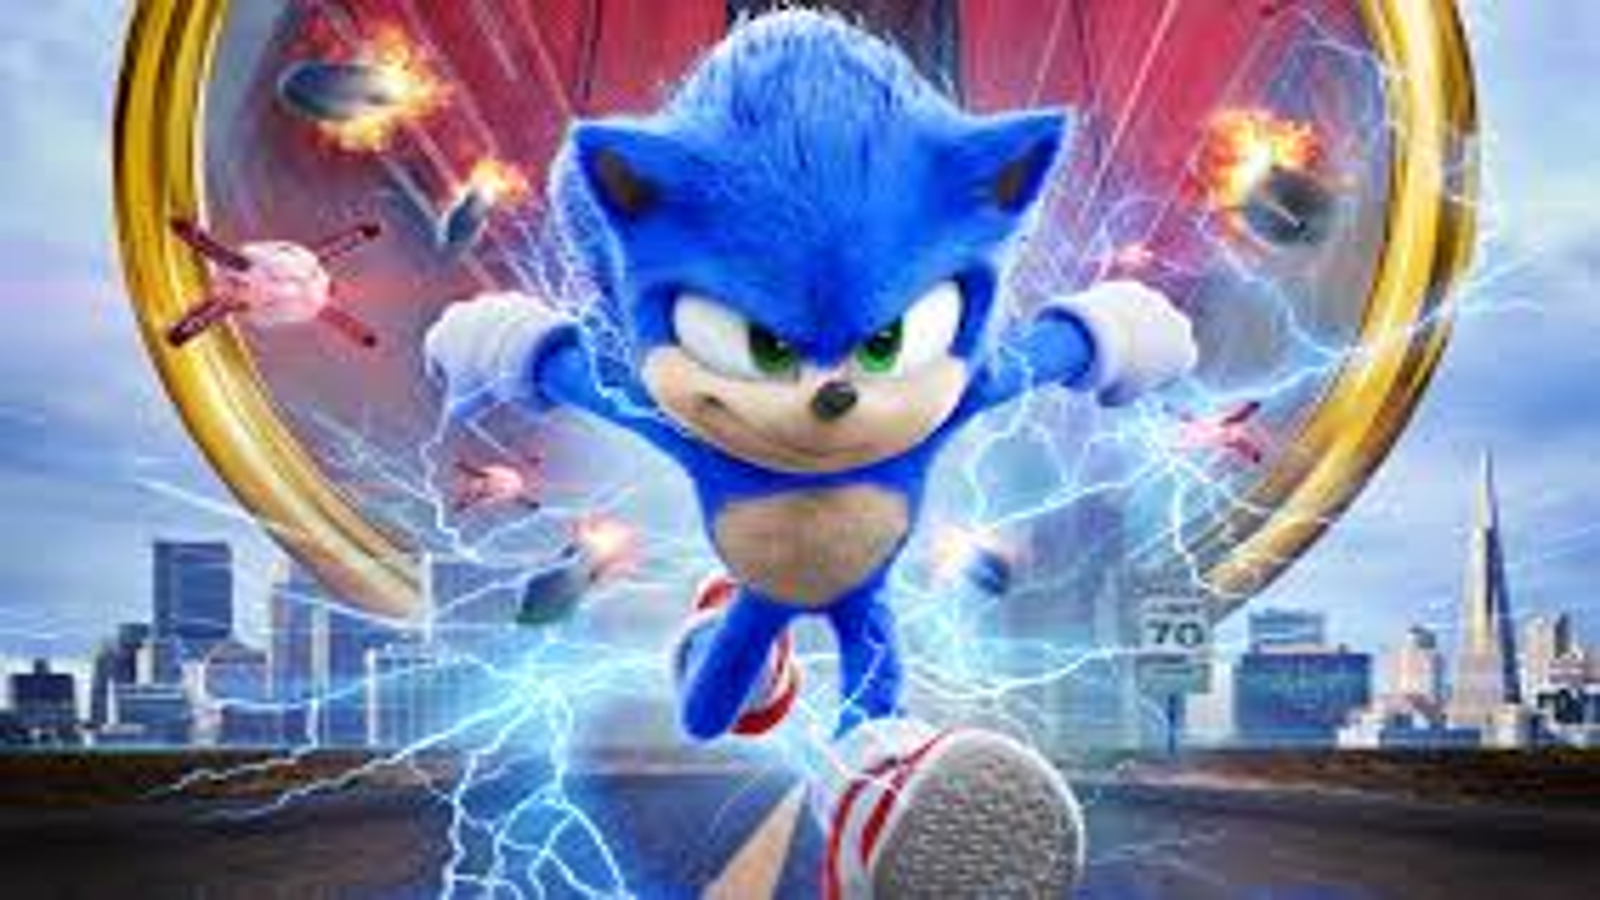 Vídeo: Sonic 2 podia ter sido melhor?